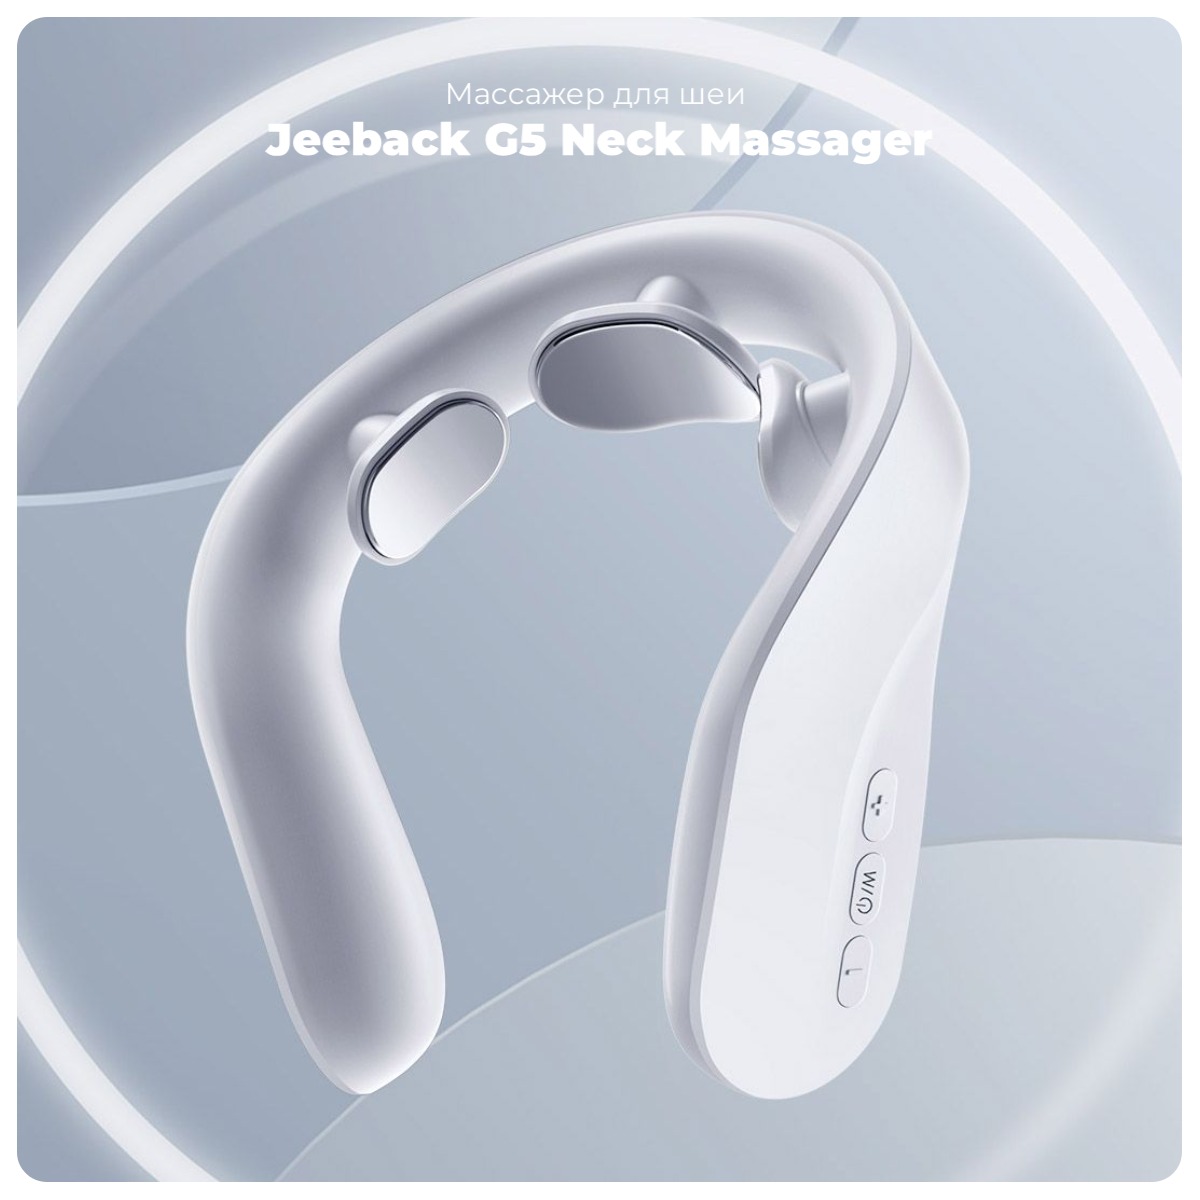 Jeeback-G5-Neck-Massager-01